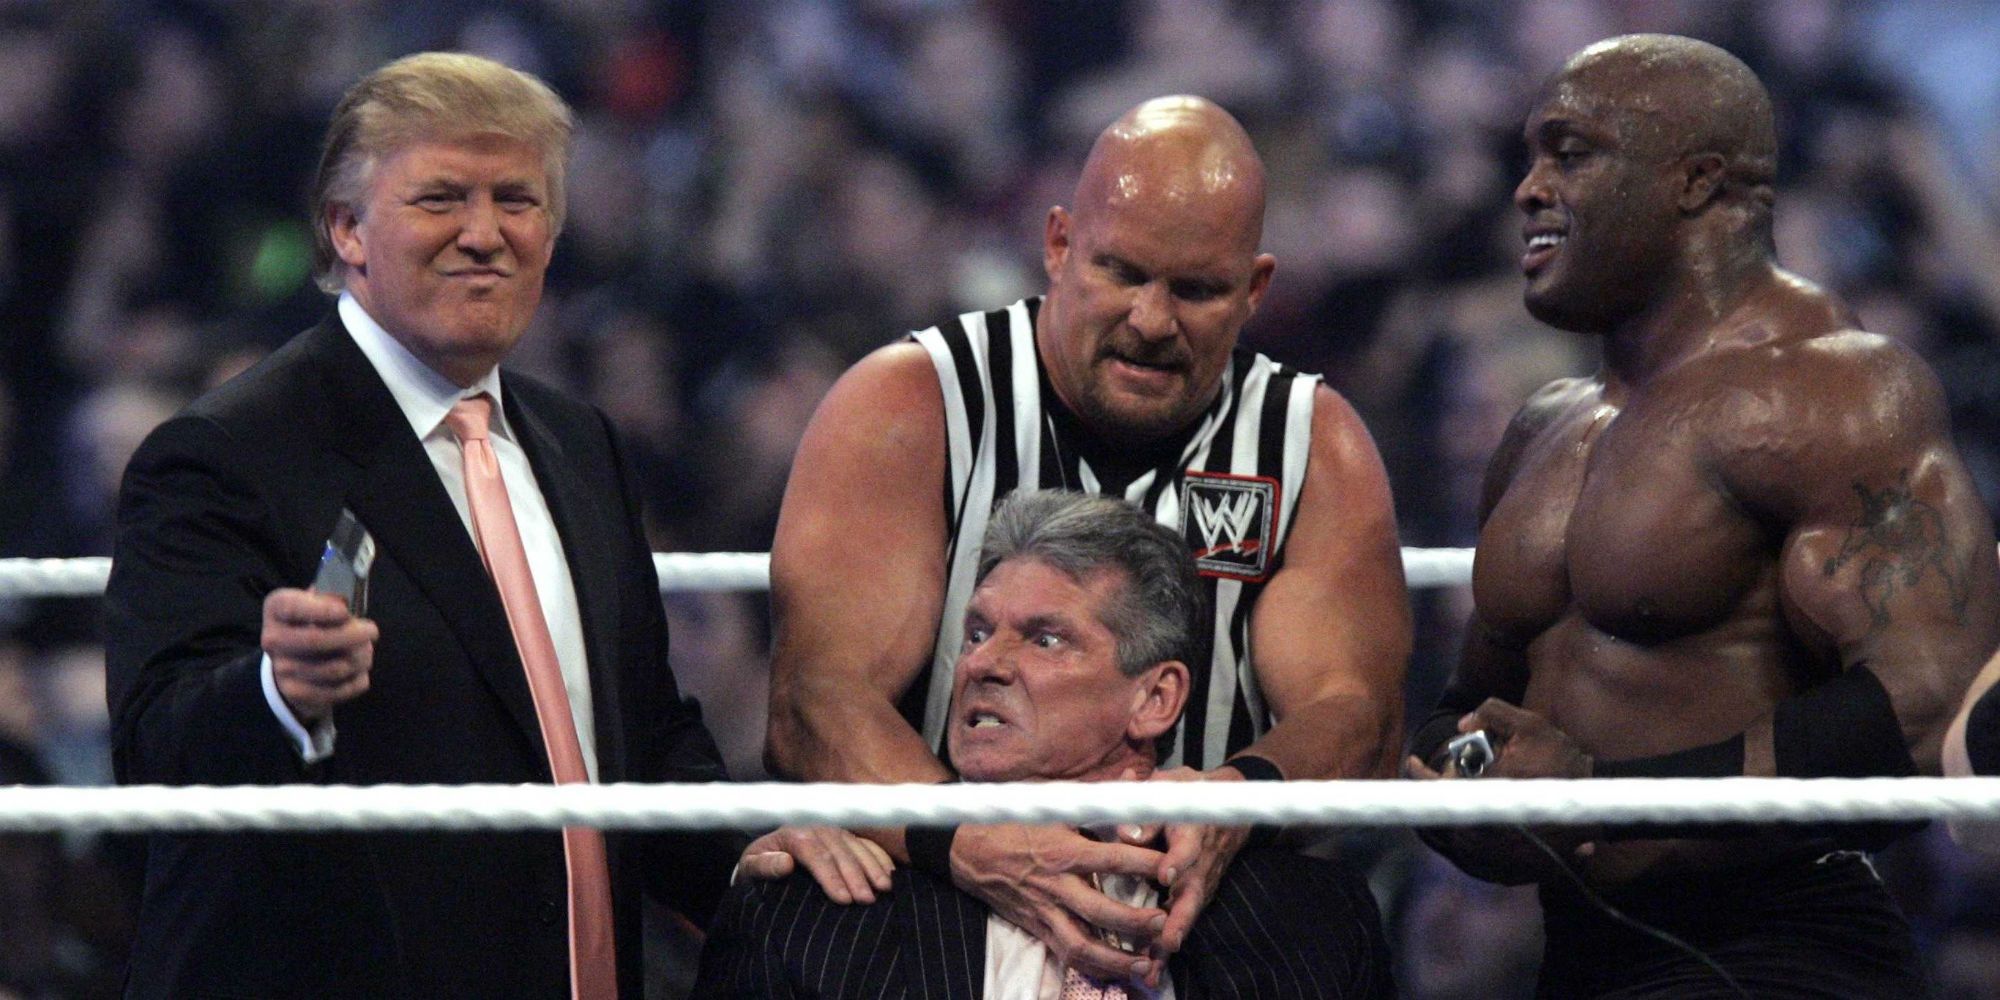 Donald Trump at WWE WrestleMania XXIII - Battle of the Billionaires